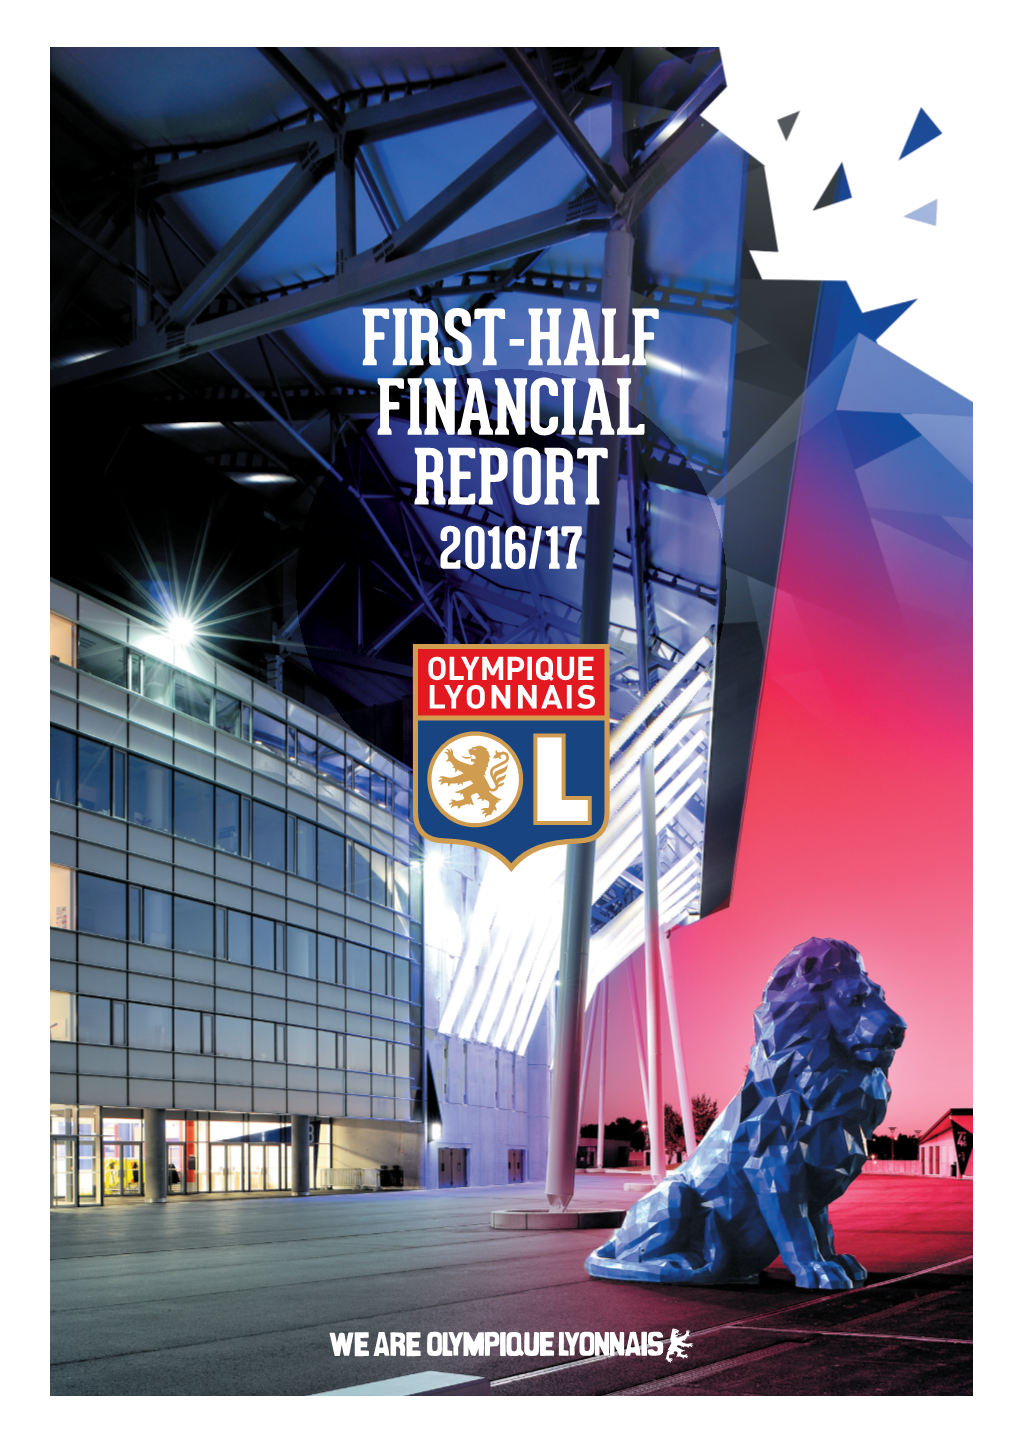 First-Half Financial Report 2016/17